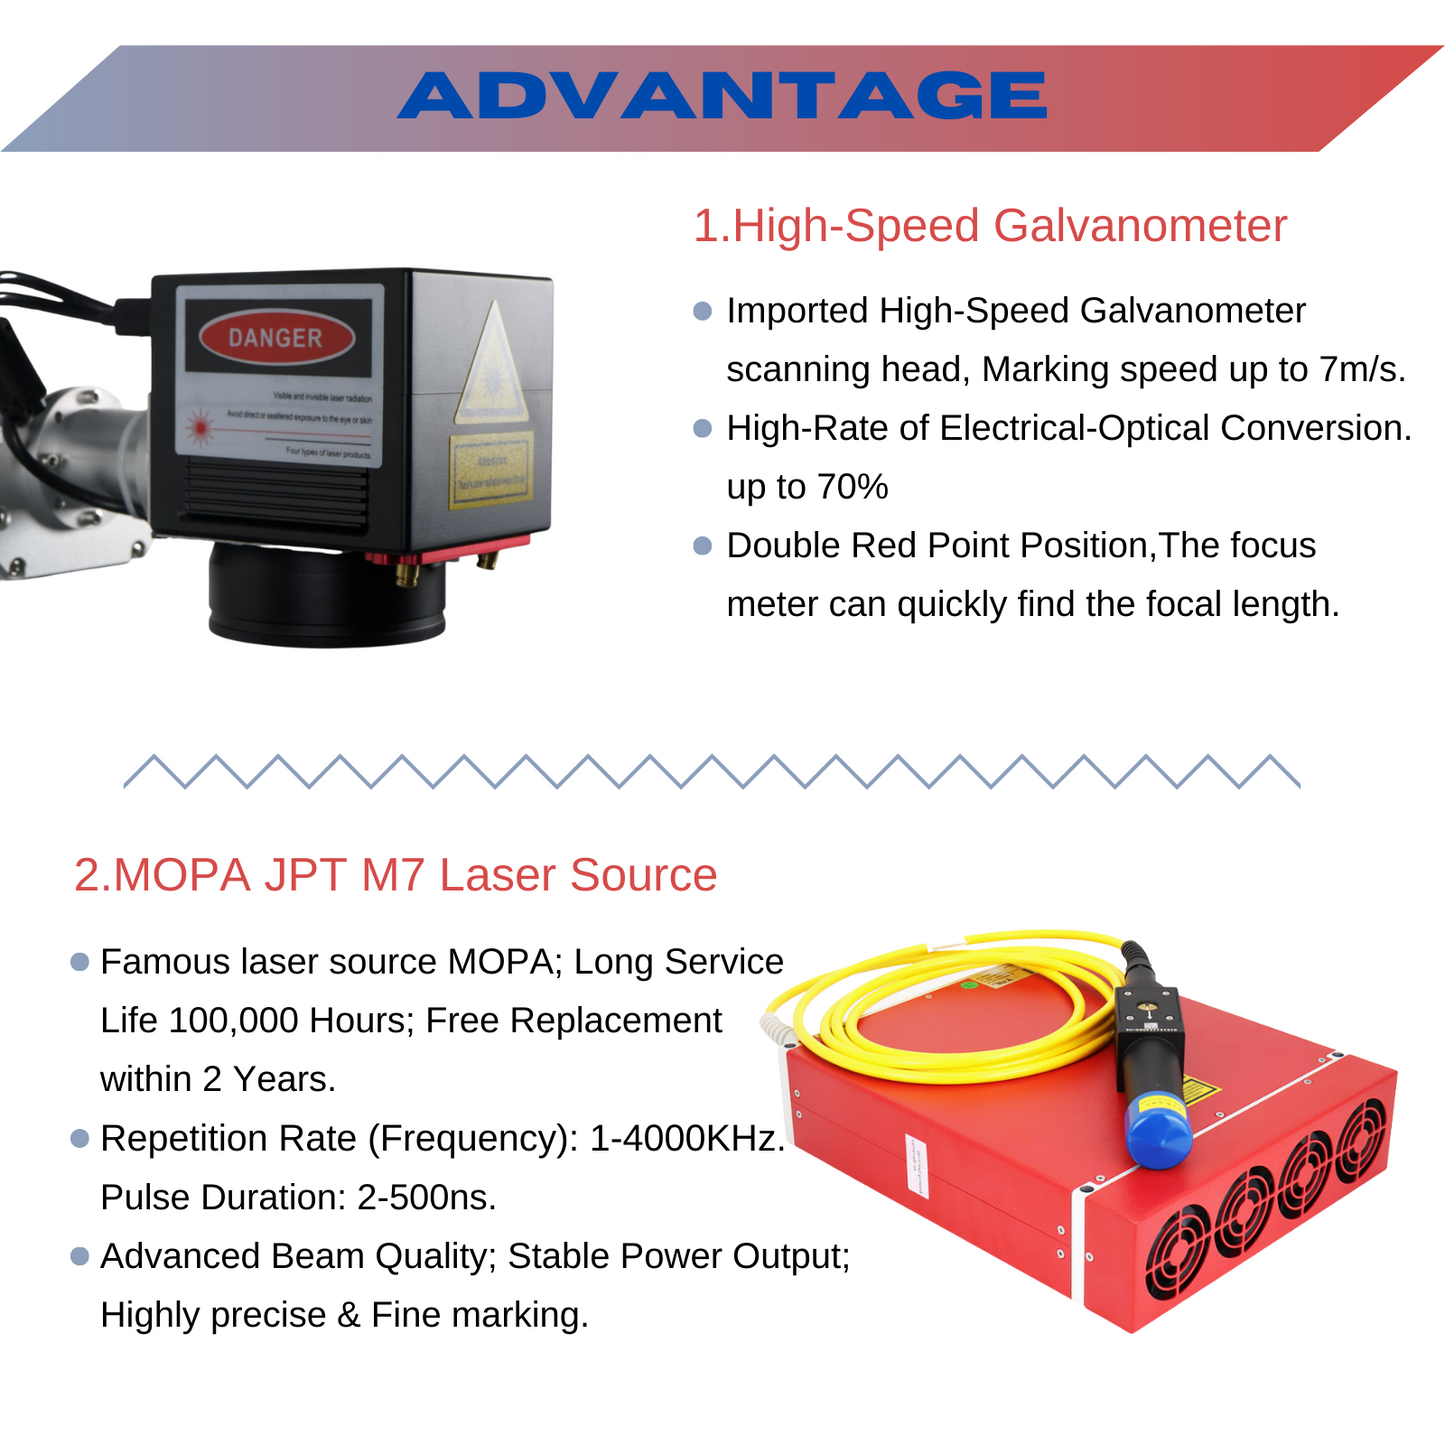 MCWlaser 30W MOPA JPT M7 Fiber Laser Engraver Marking Machine